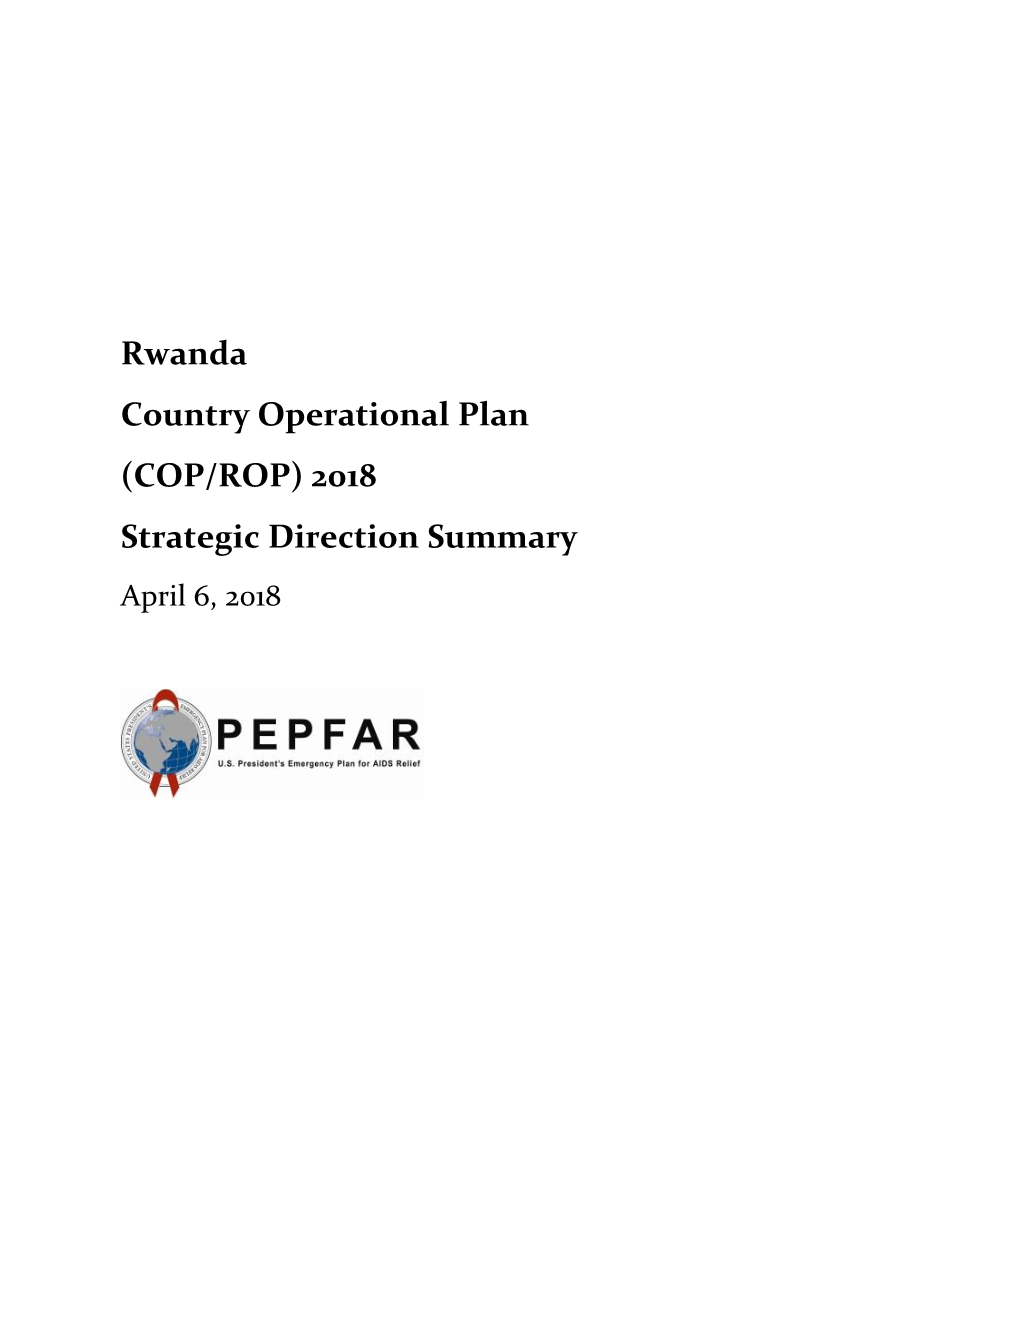 Rwanda Country Operational Plan 2018 Strategic Direction Summary